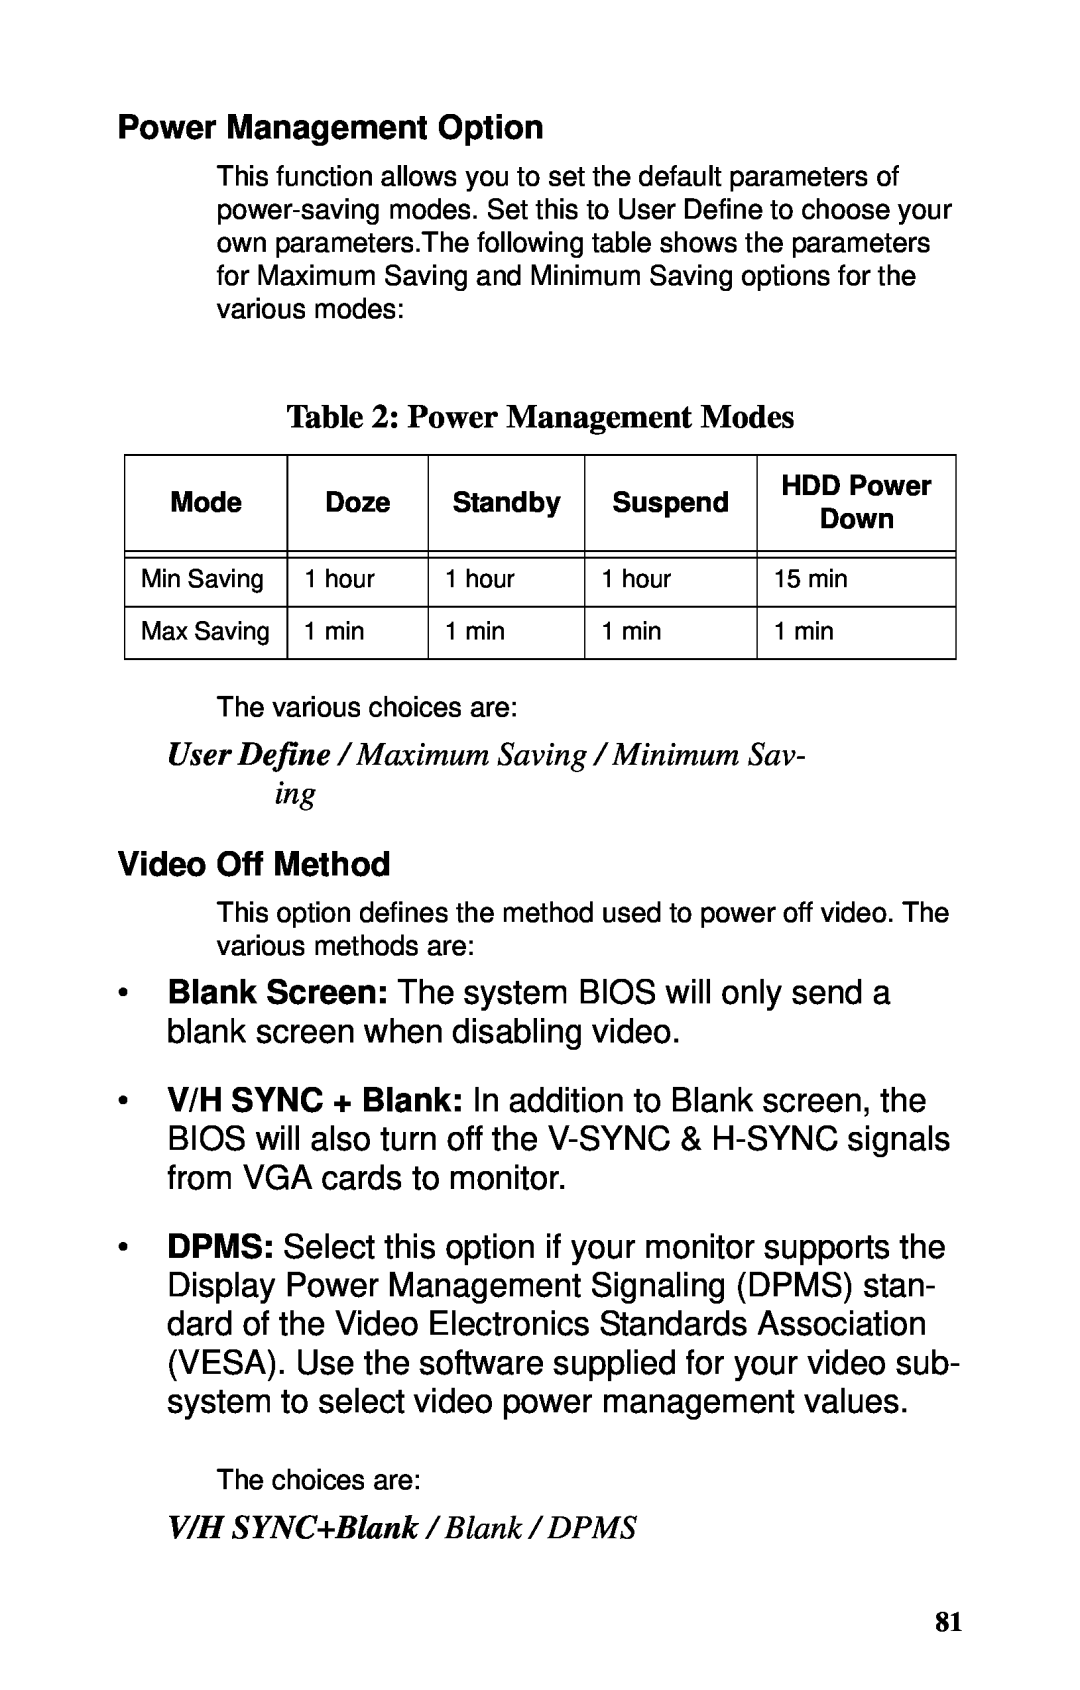 Tyan Computer GX21, B5102 Power Management Option, Power Management Modes, User Define / Maximum Saving / Minimum Sav- ing 